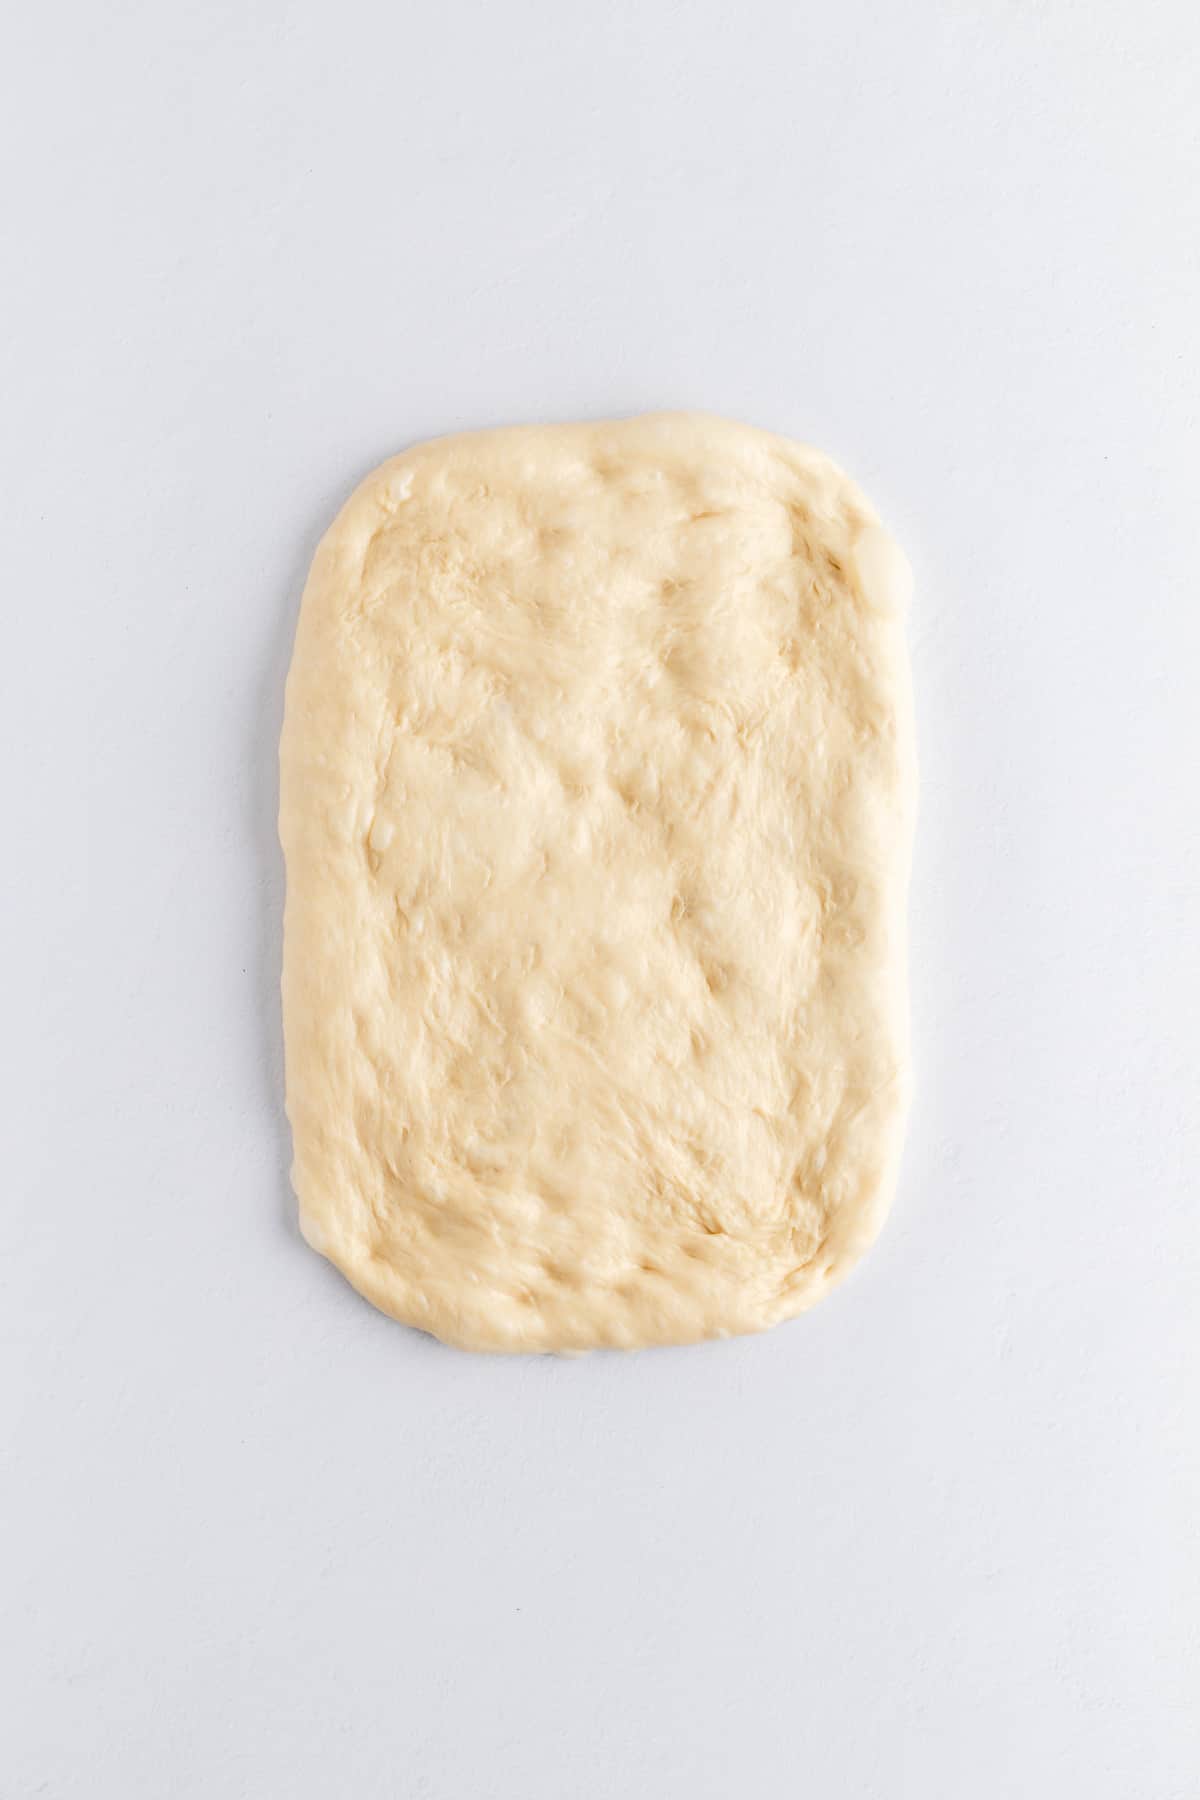 deflated brioche dough on a white background.